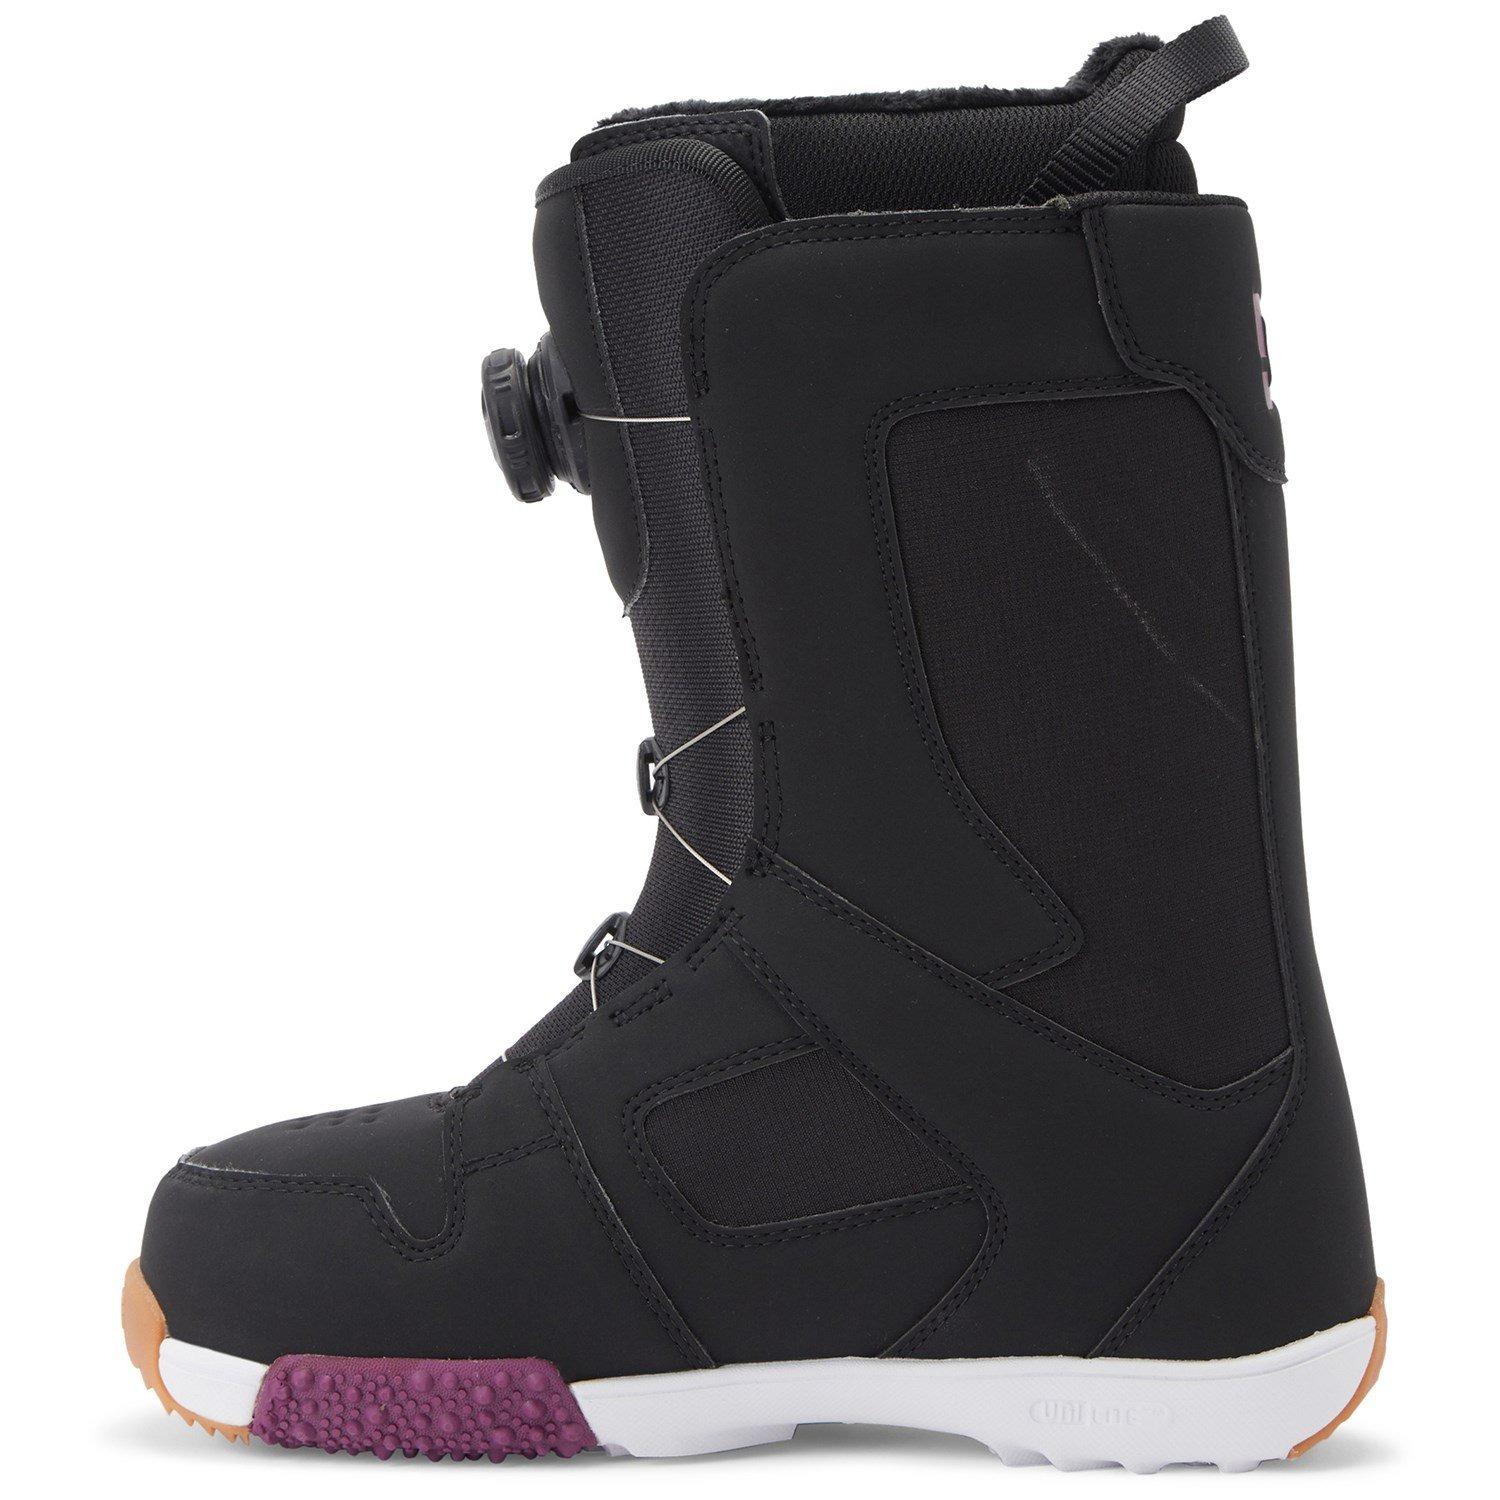 DC Phase Boa Pro Snowboard Boots - Women's